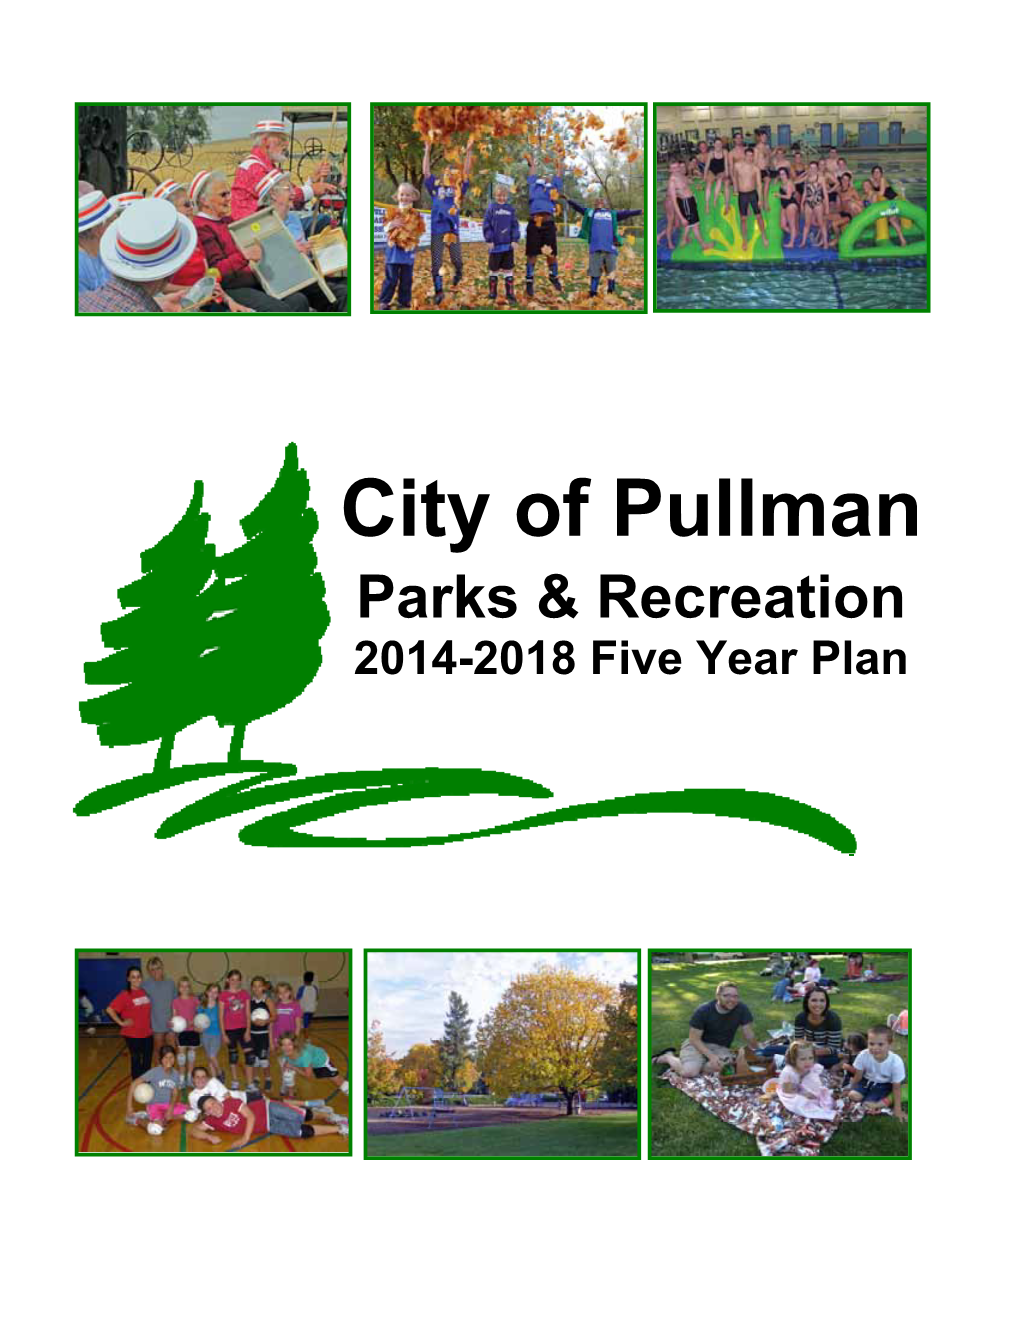 Pullman Parks & Recreation